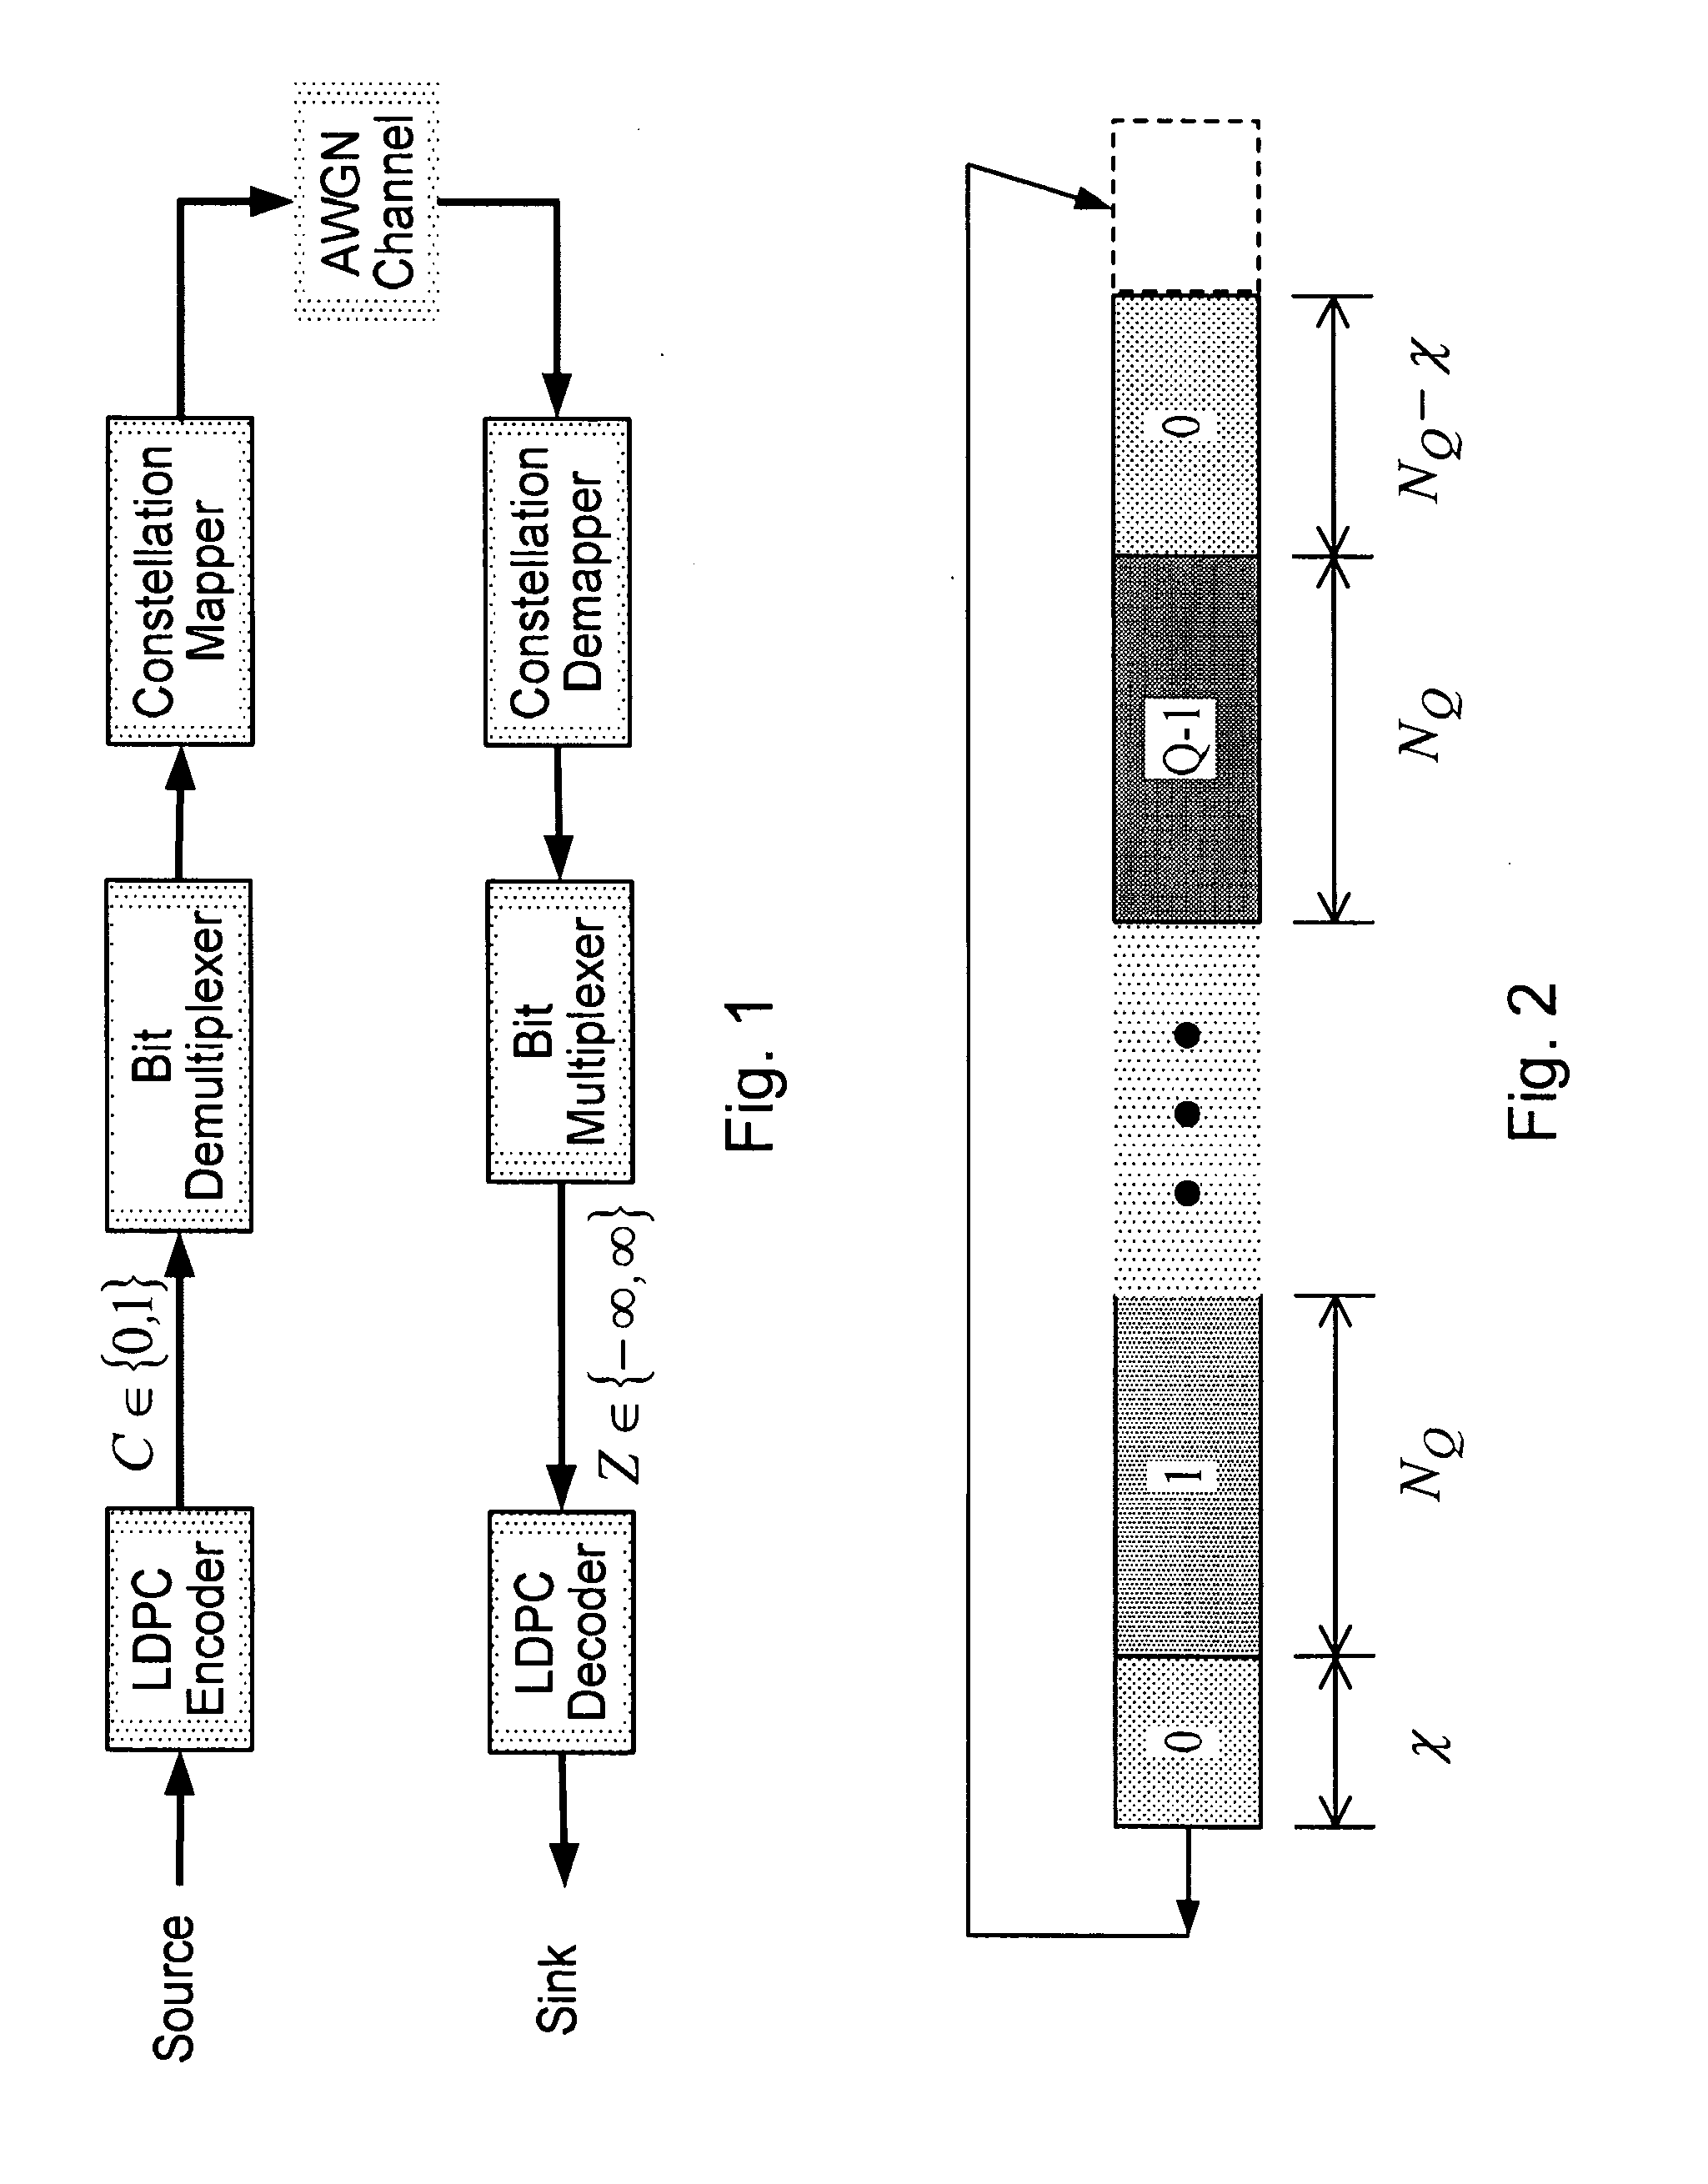 Method and apparatus for demultiplexer design for multi-edge type LDPC coded modulation